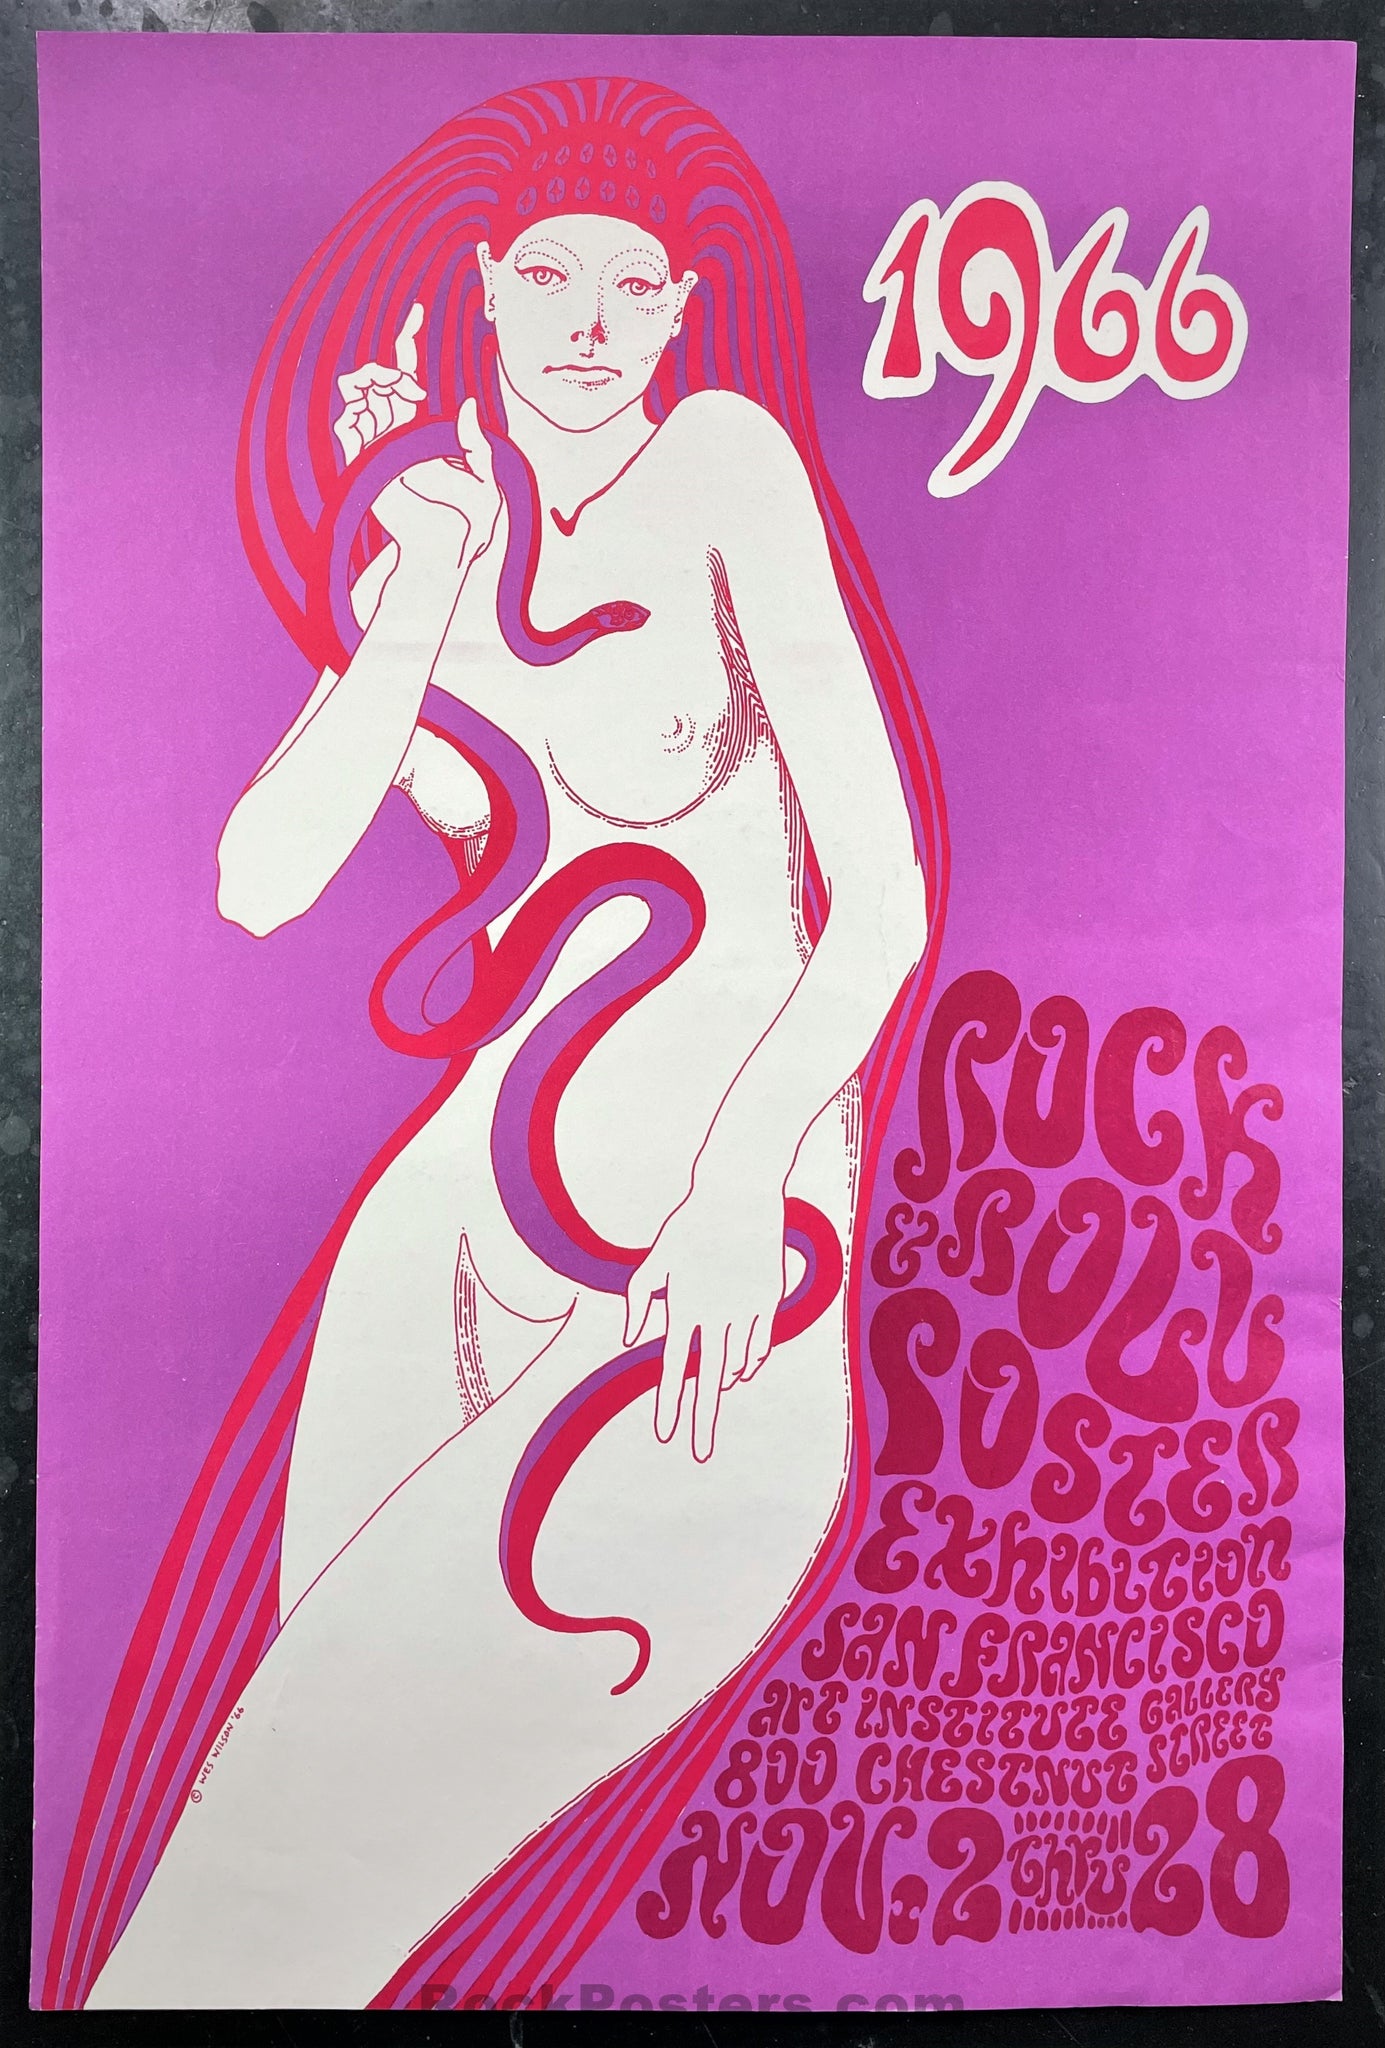 AUCTION - Wes Wilson - Rock Poster Exhibition - 1966 Poster - Near Mint Minus